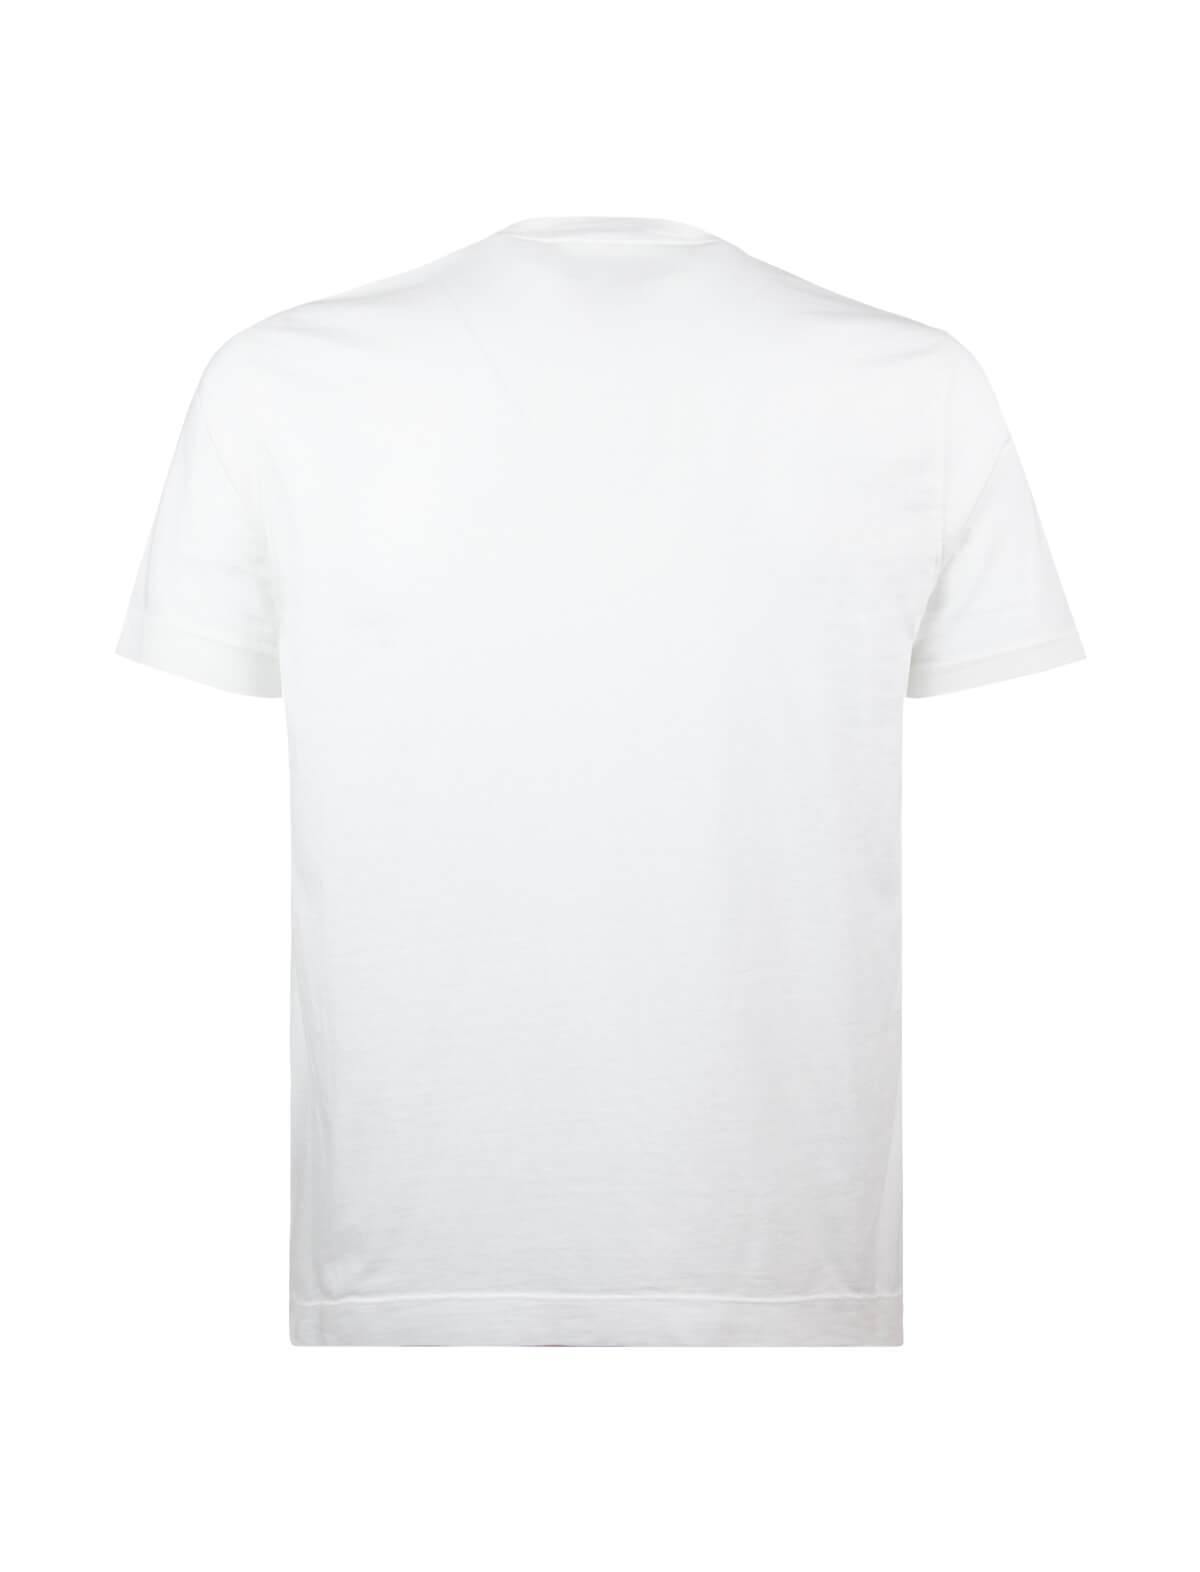 CIRCOLO 1901 Crew Neck Cotton T-Shirt in White | CLOSET Singapore